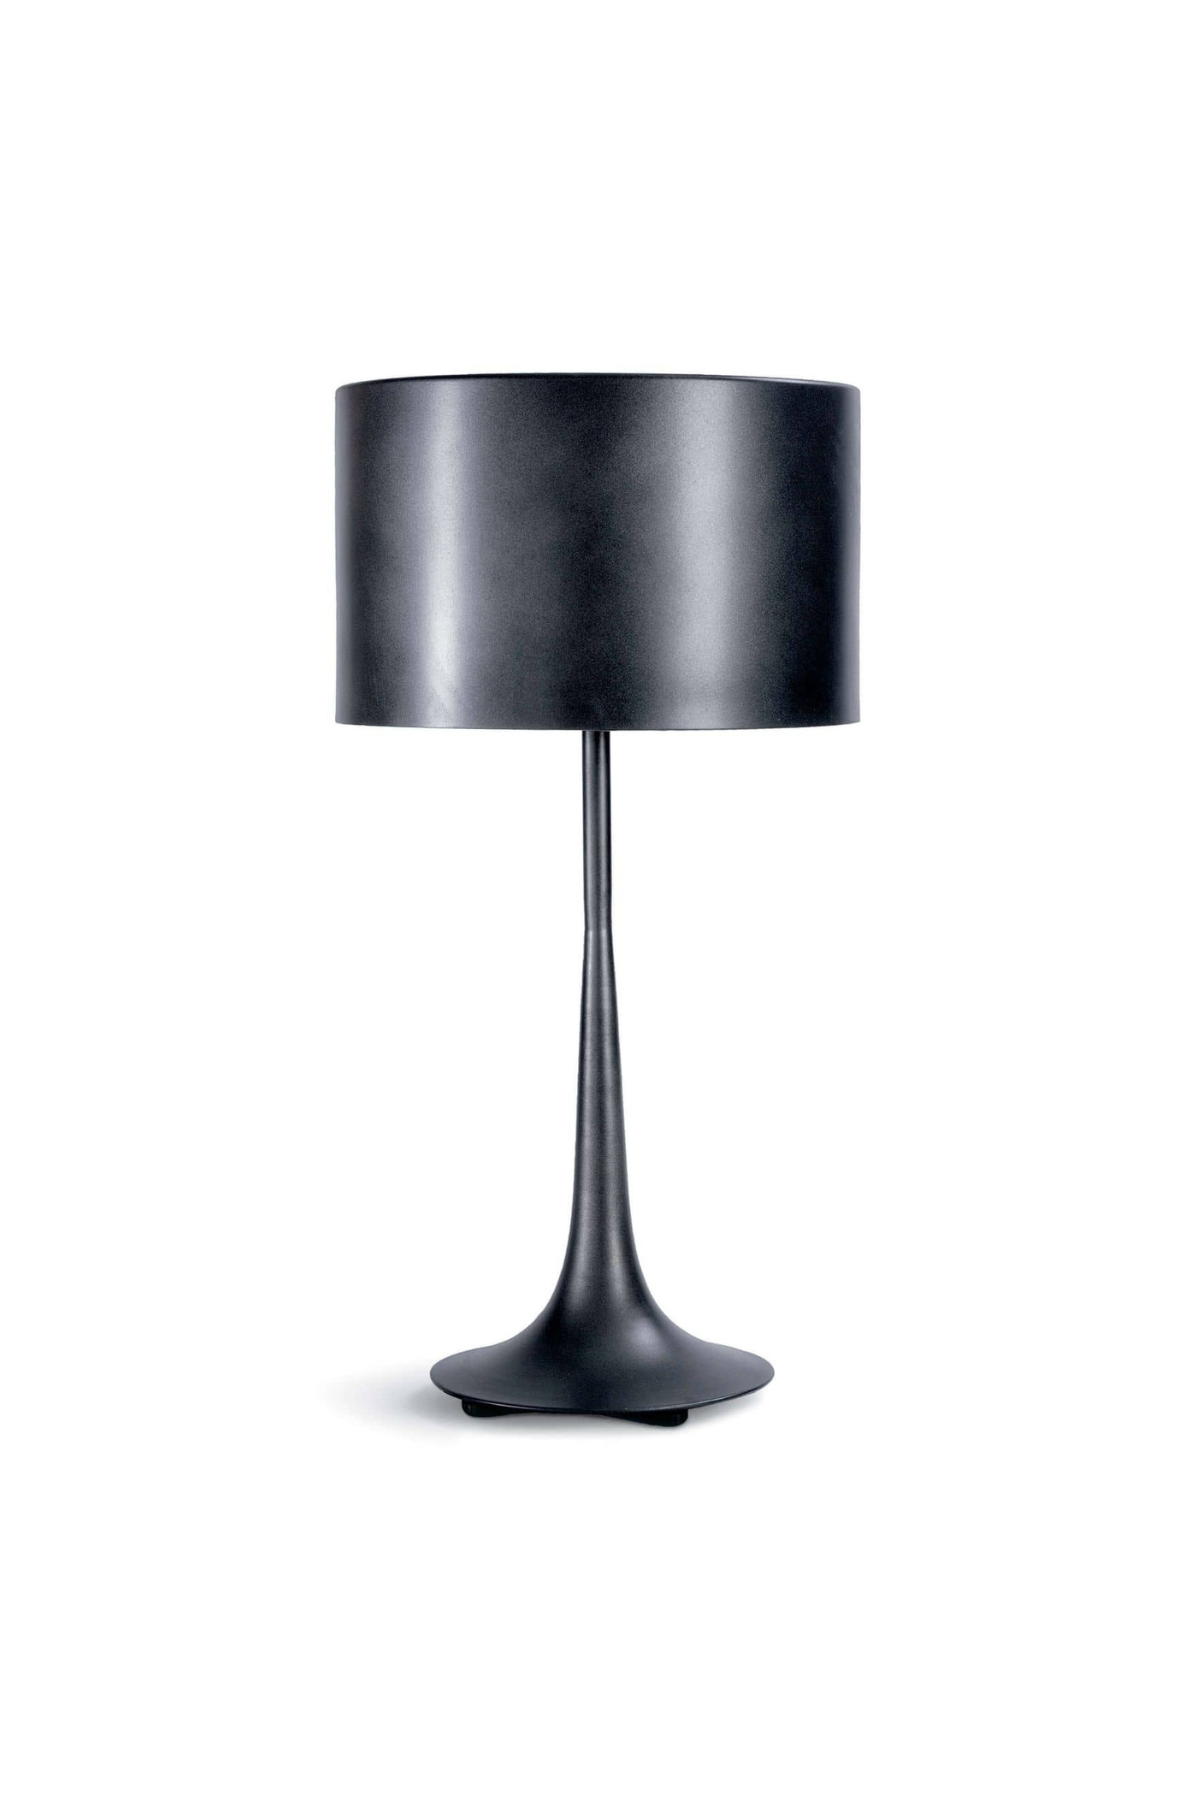 Regina Andrew Trilogy Table Lamp